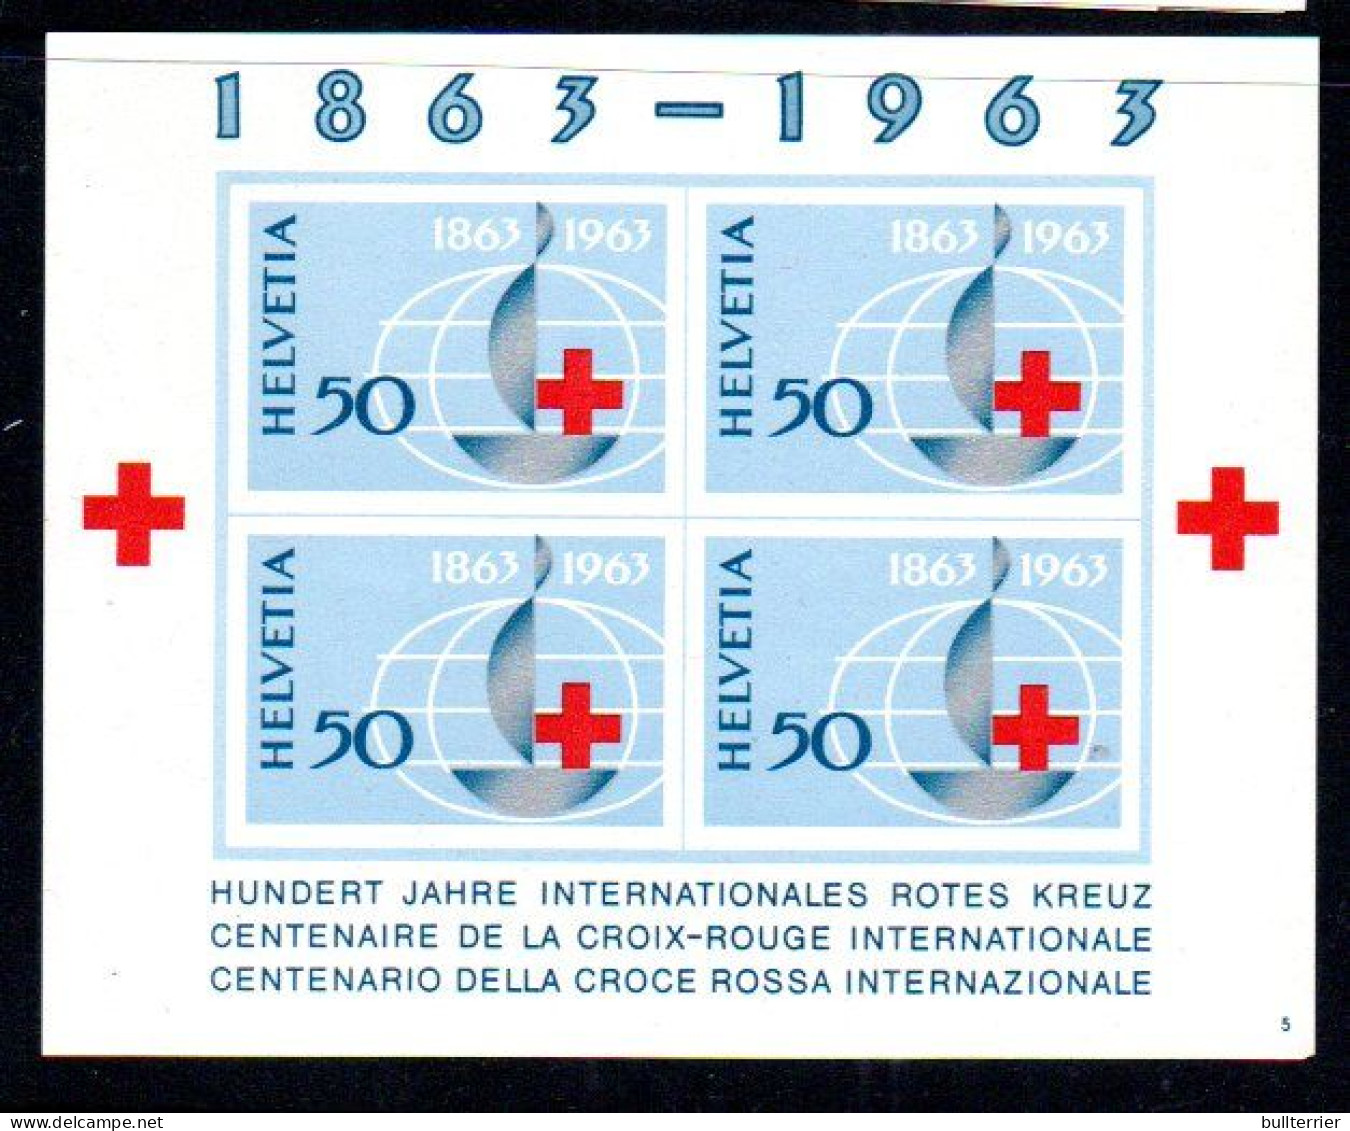 MEDICINE - SWITZERLAND - 1963 - RED CROSS S/SHEET MINT NEVER HINGED SG £11 - Medicine